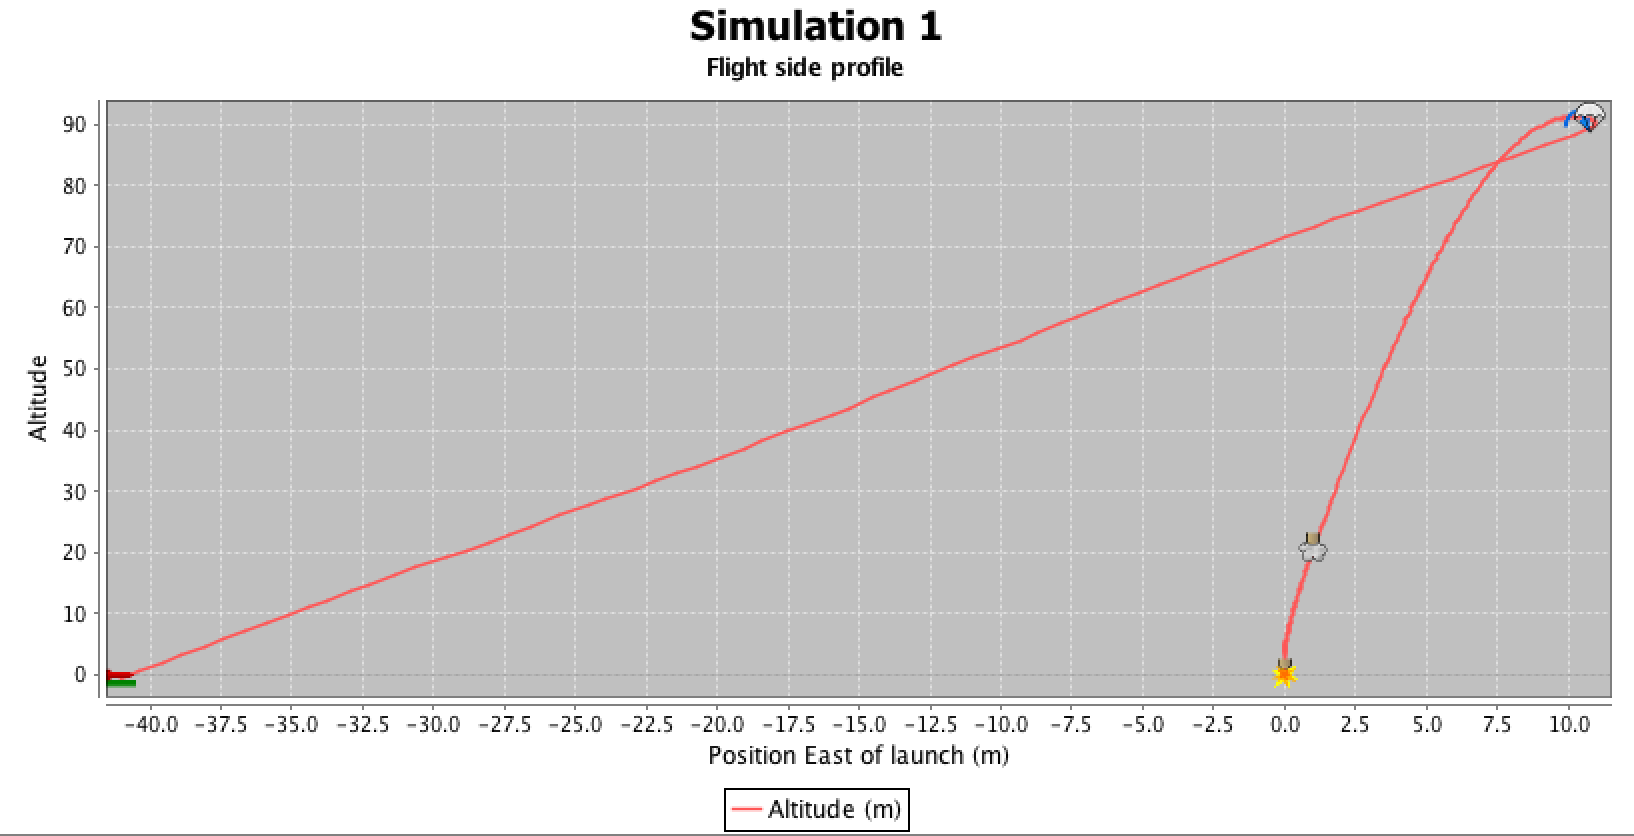 open rocket simulation software